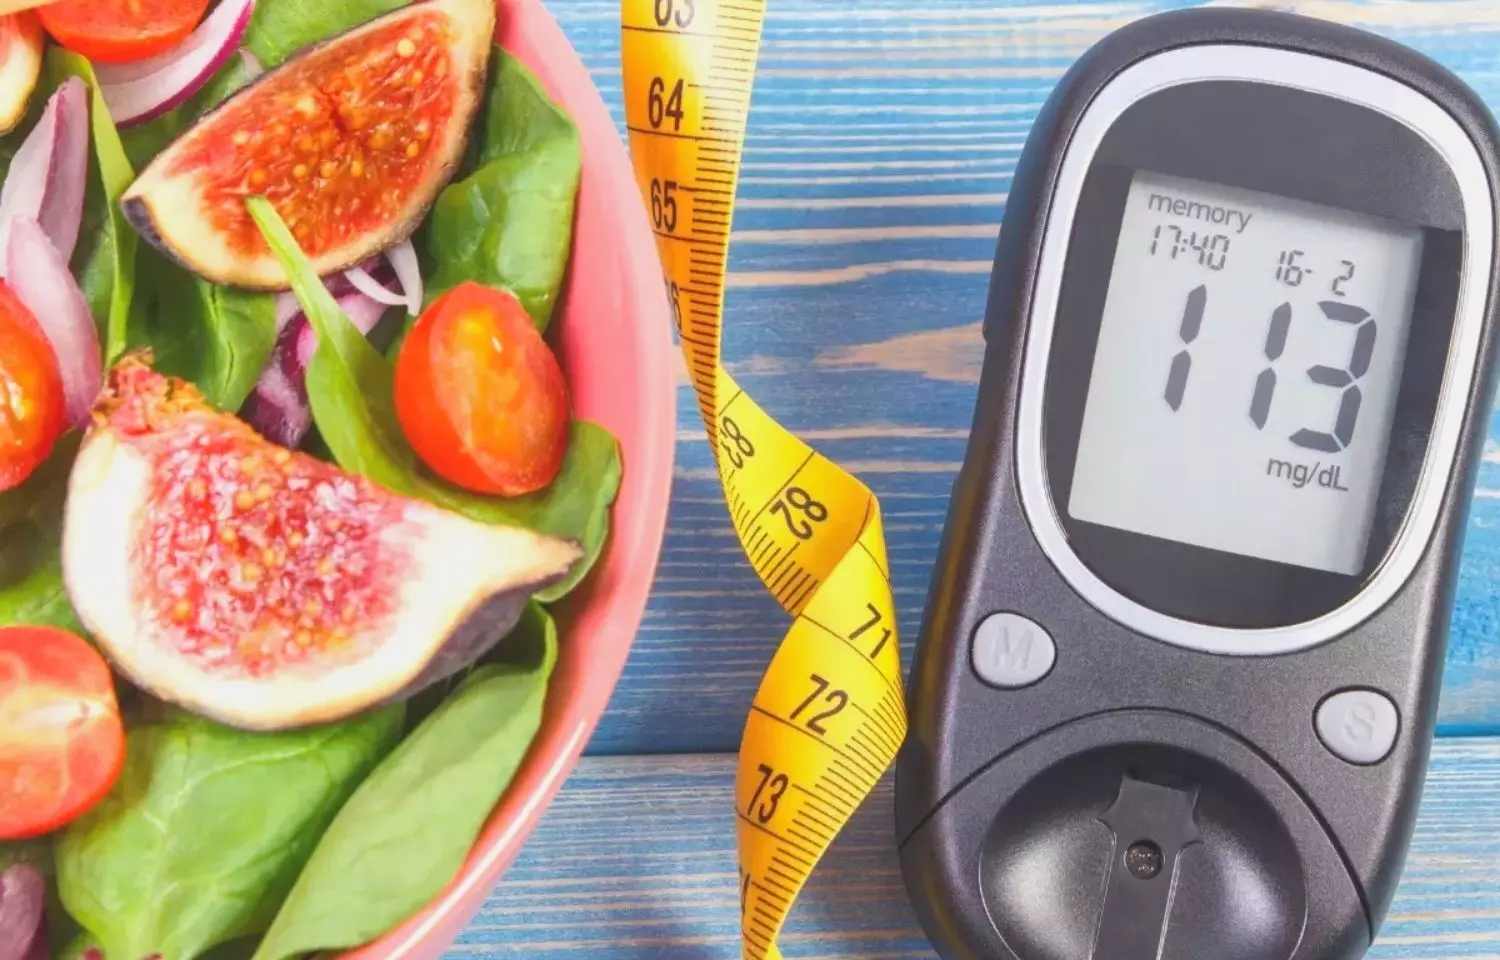 Healthier diet tied to lower risk of type 2 diabetes regardless of genetic predisposition